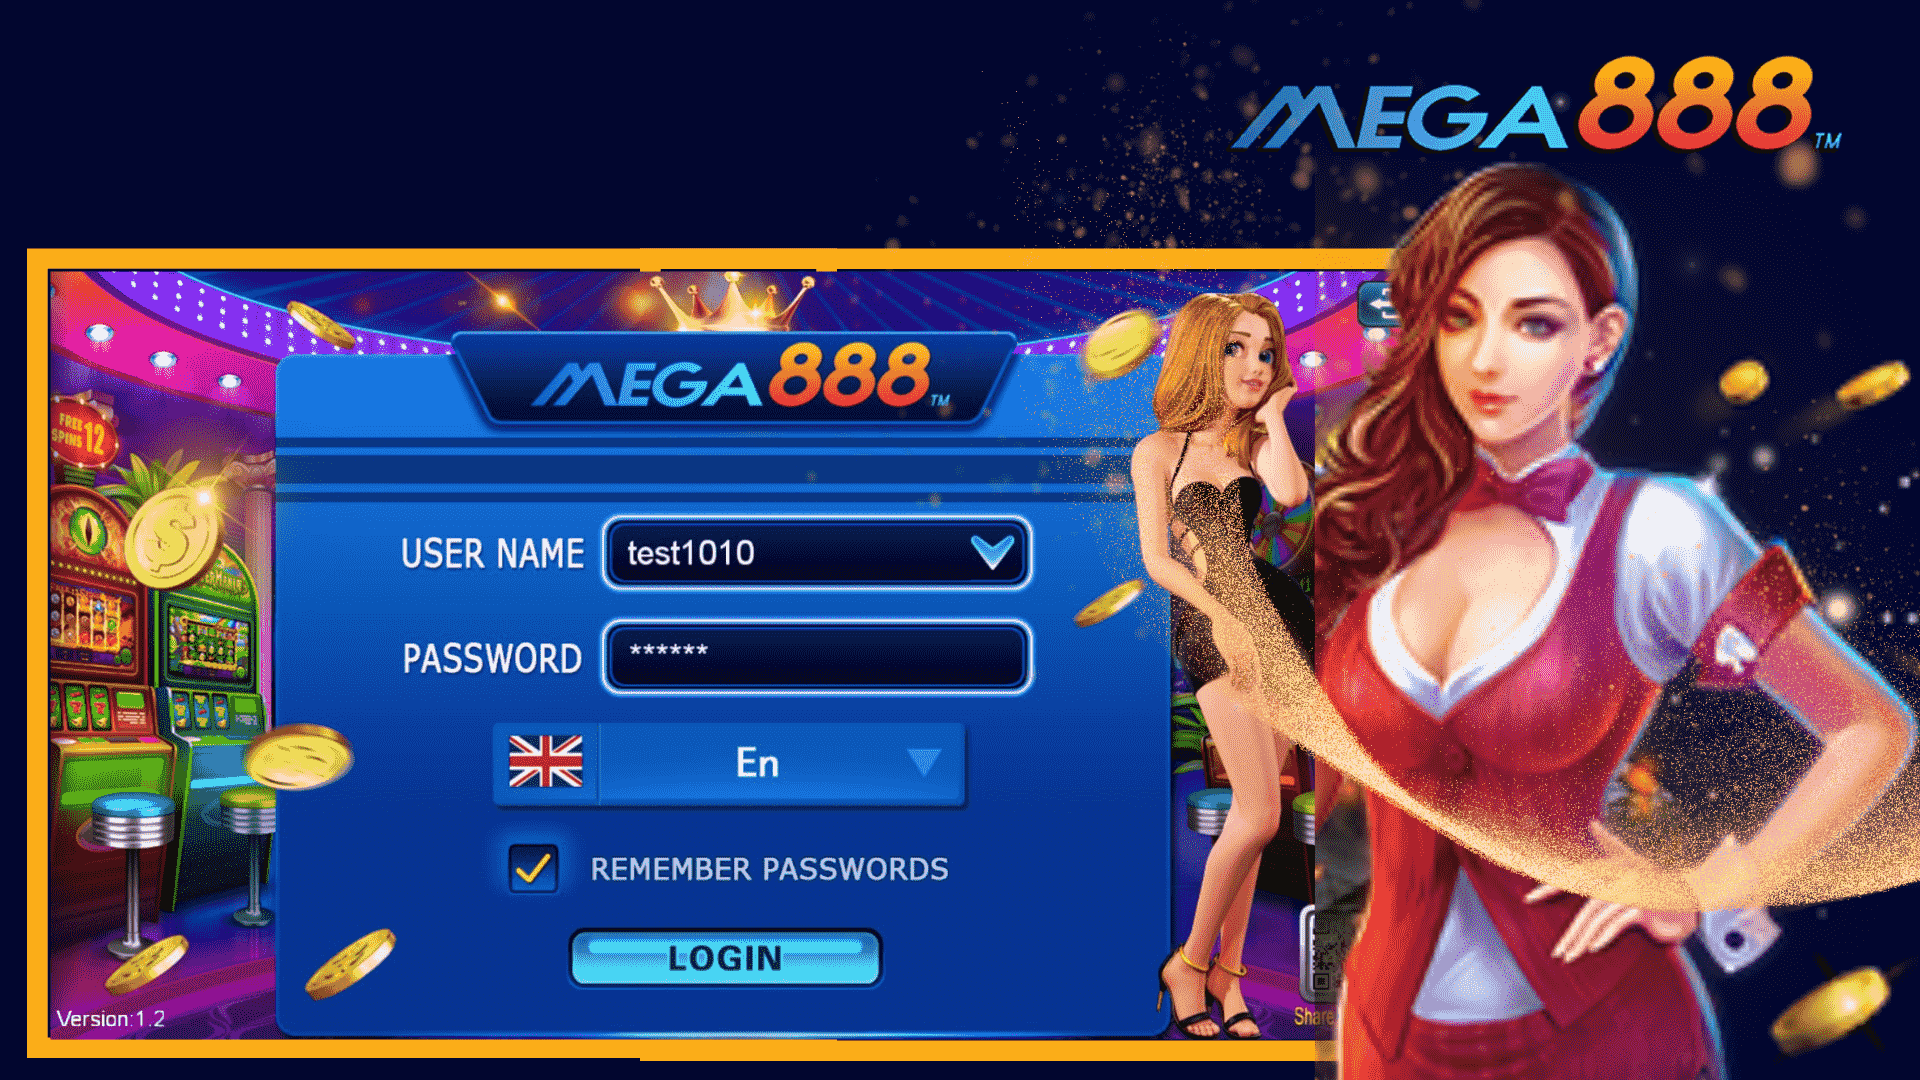 How to deposit the money in mega888